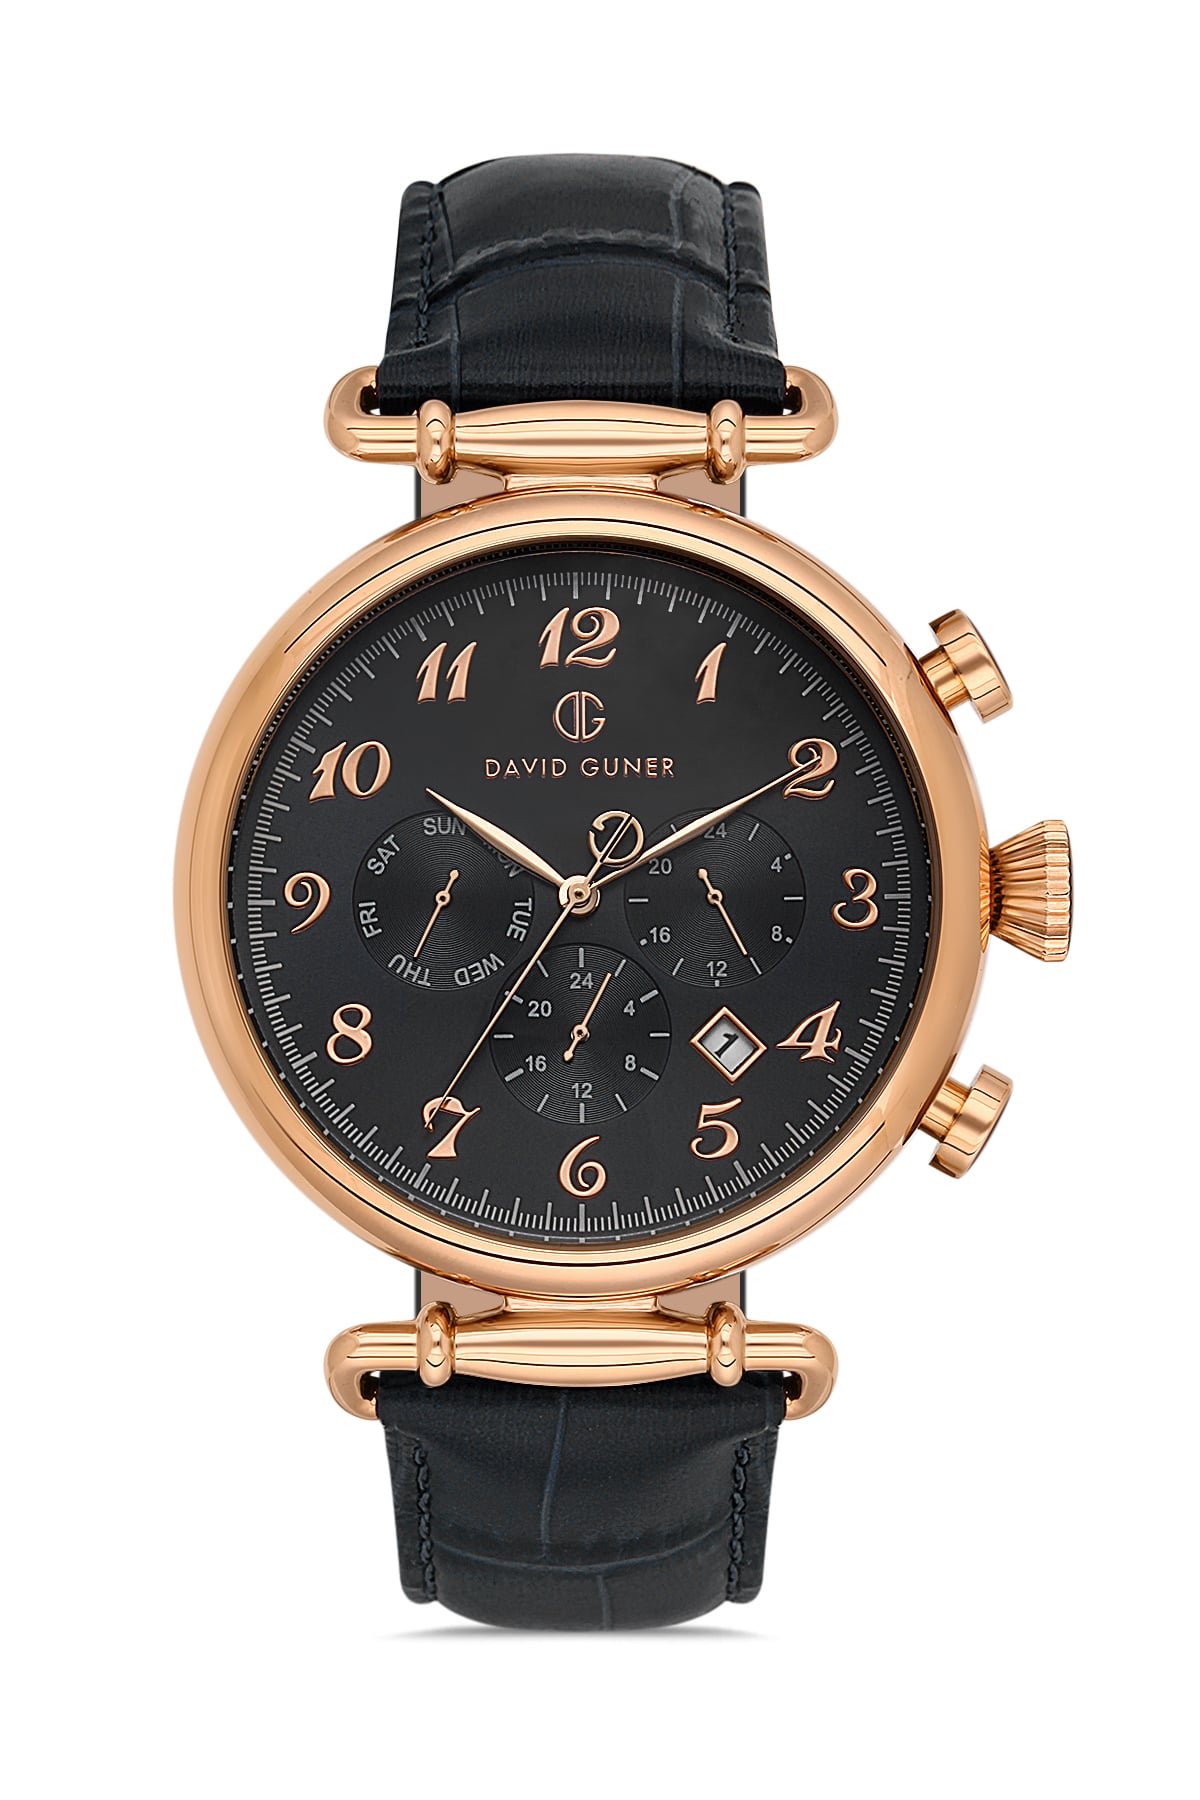 DAVID GUNER Rose-Coated Black Dial Multifunctional Men's Wristwatch